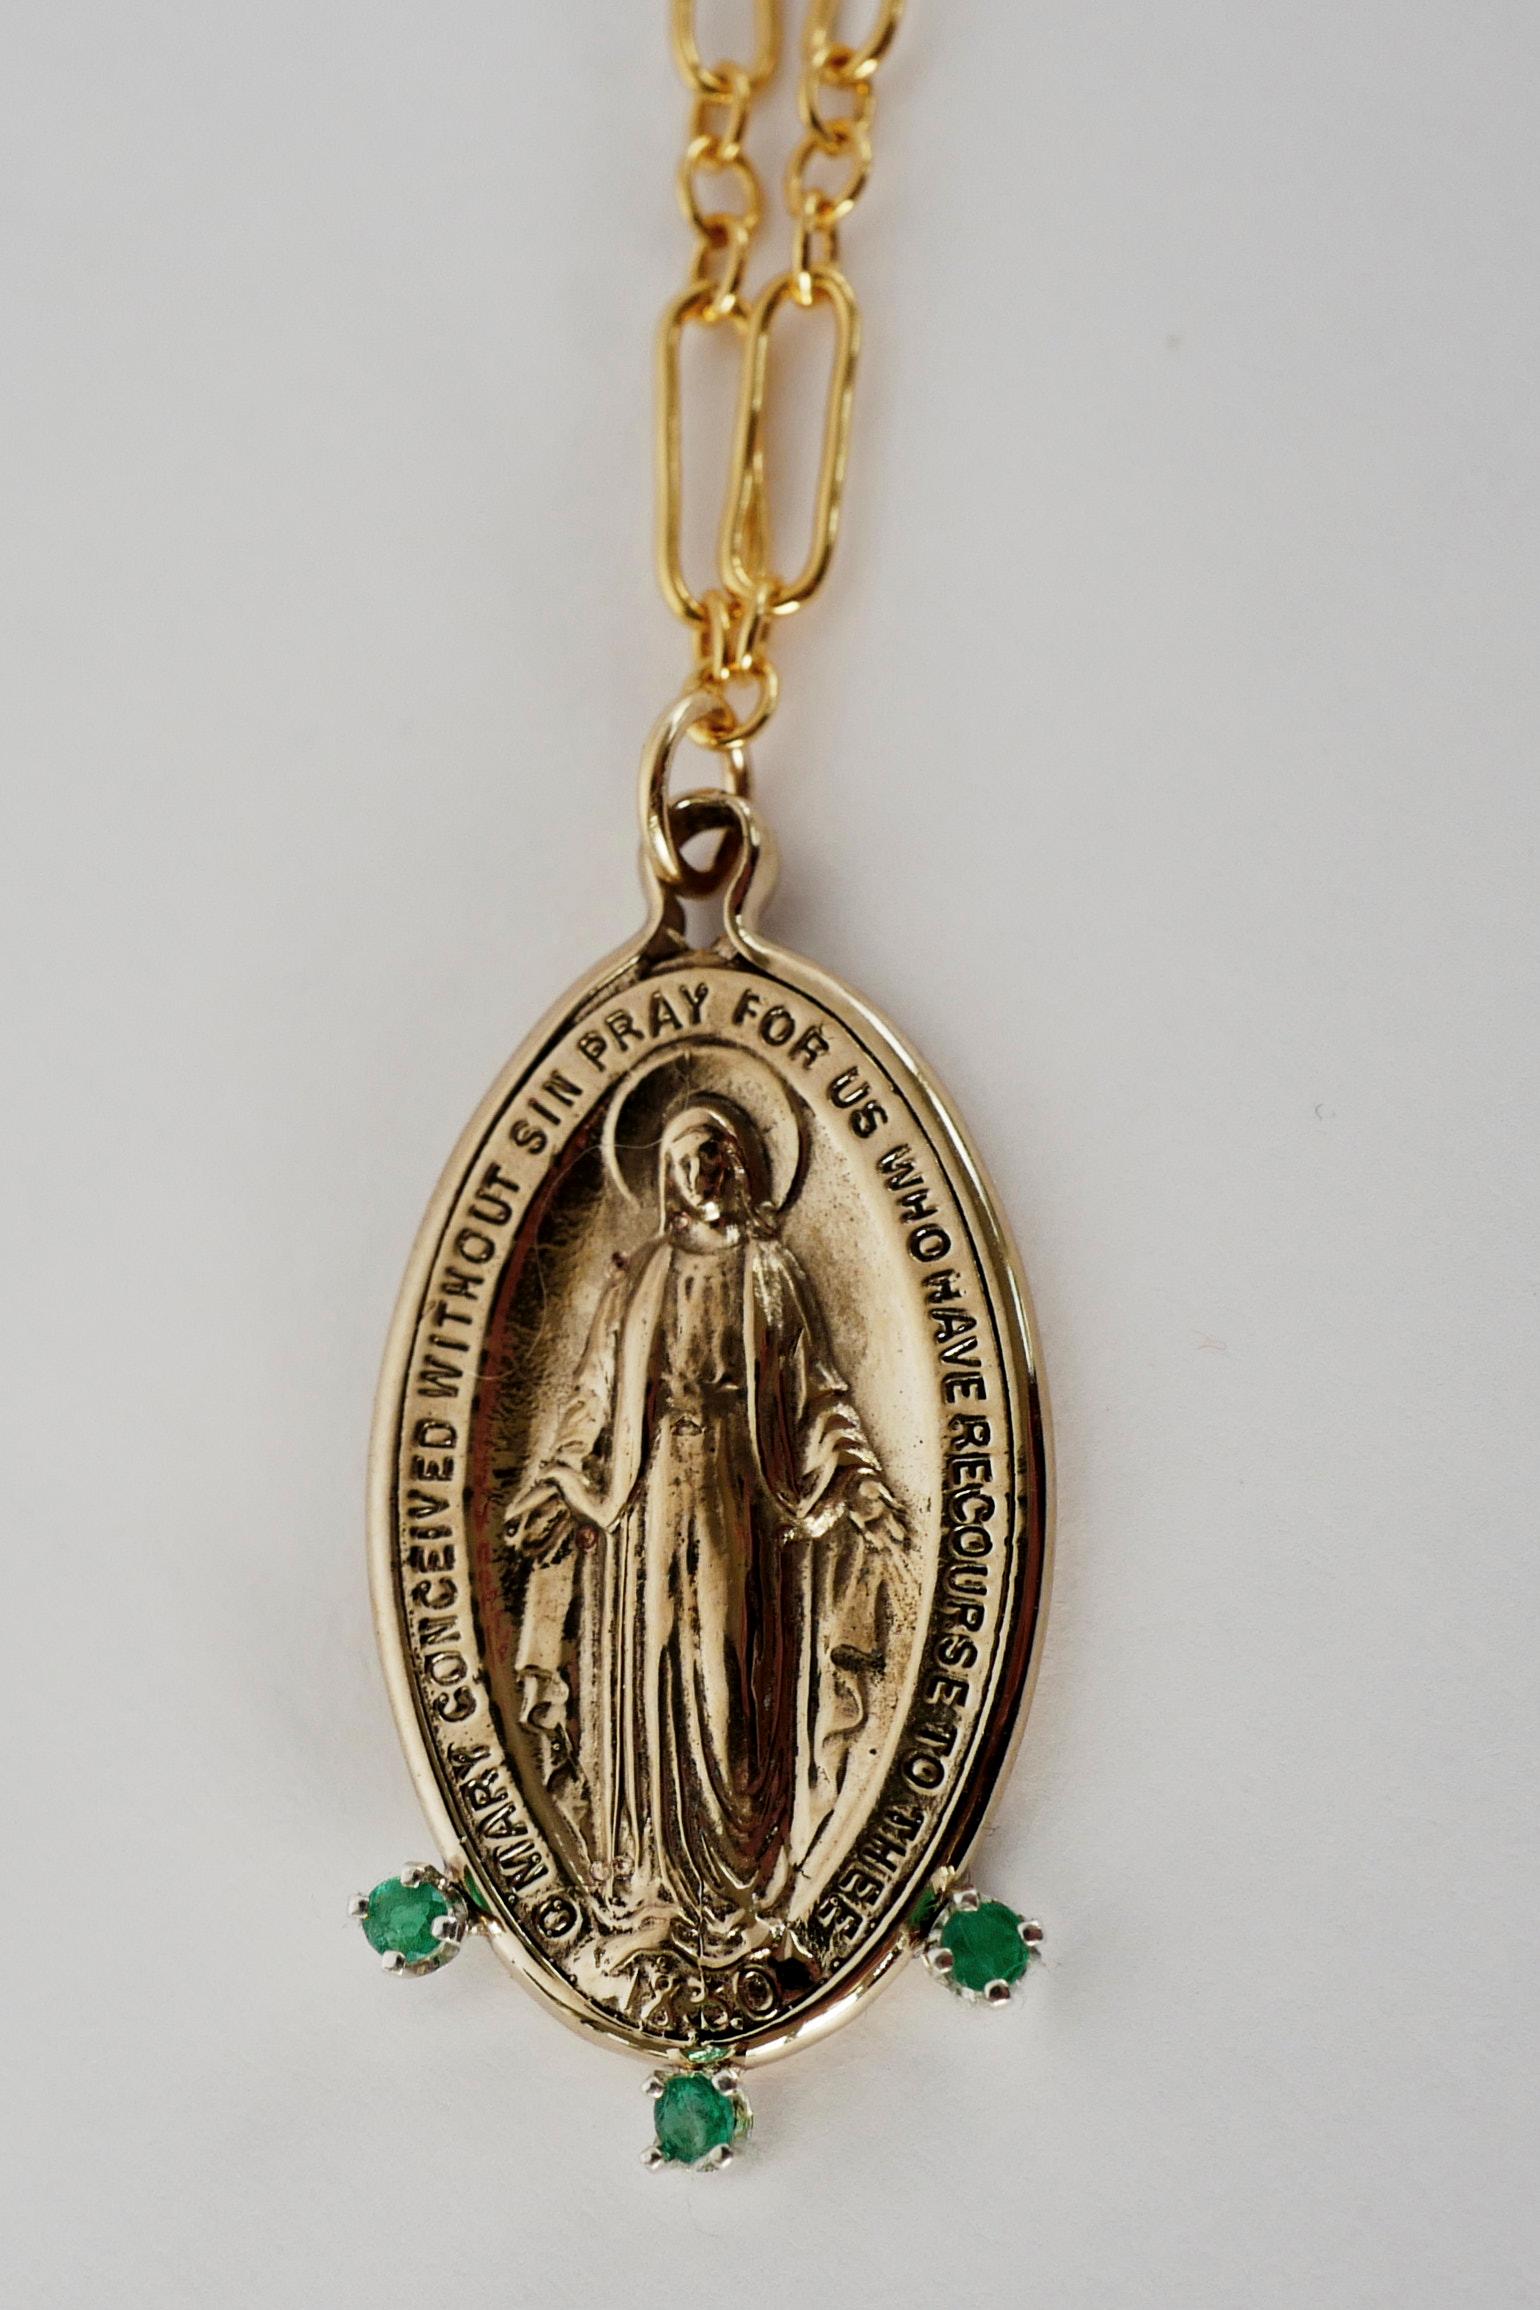 Brilliant Cut Chain Necklace Medal Virgin Mary Gem Opal Oval Pendant J Dauphin For Sale